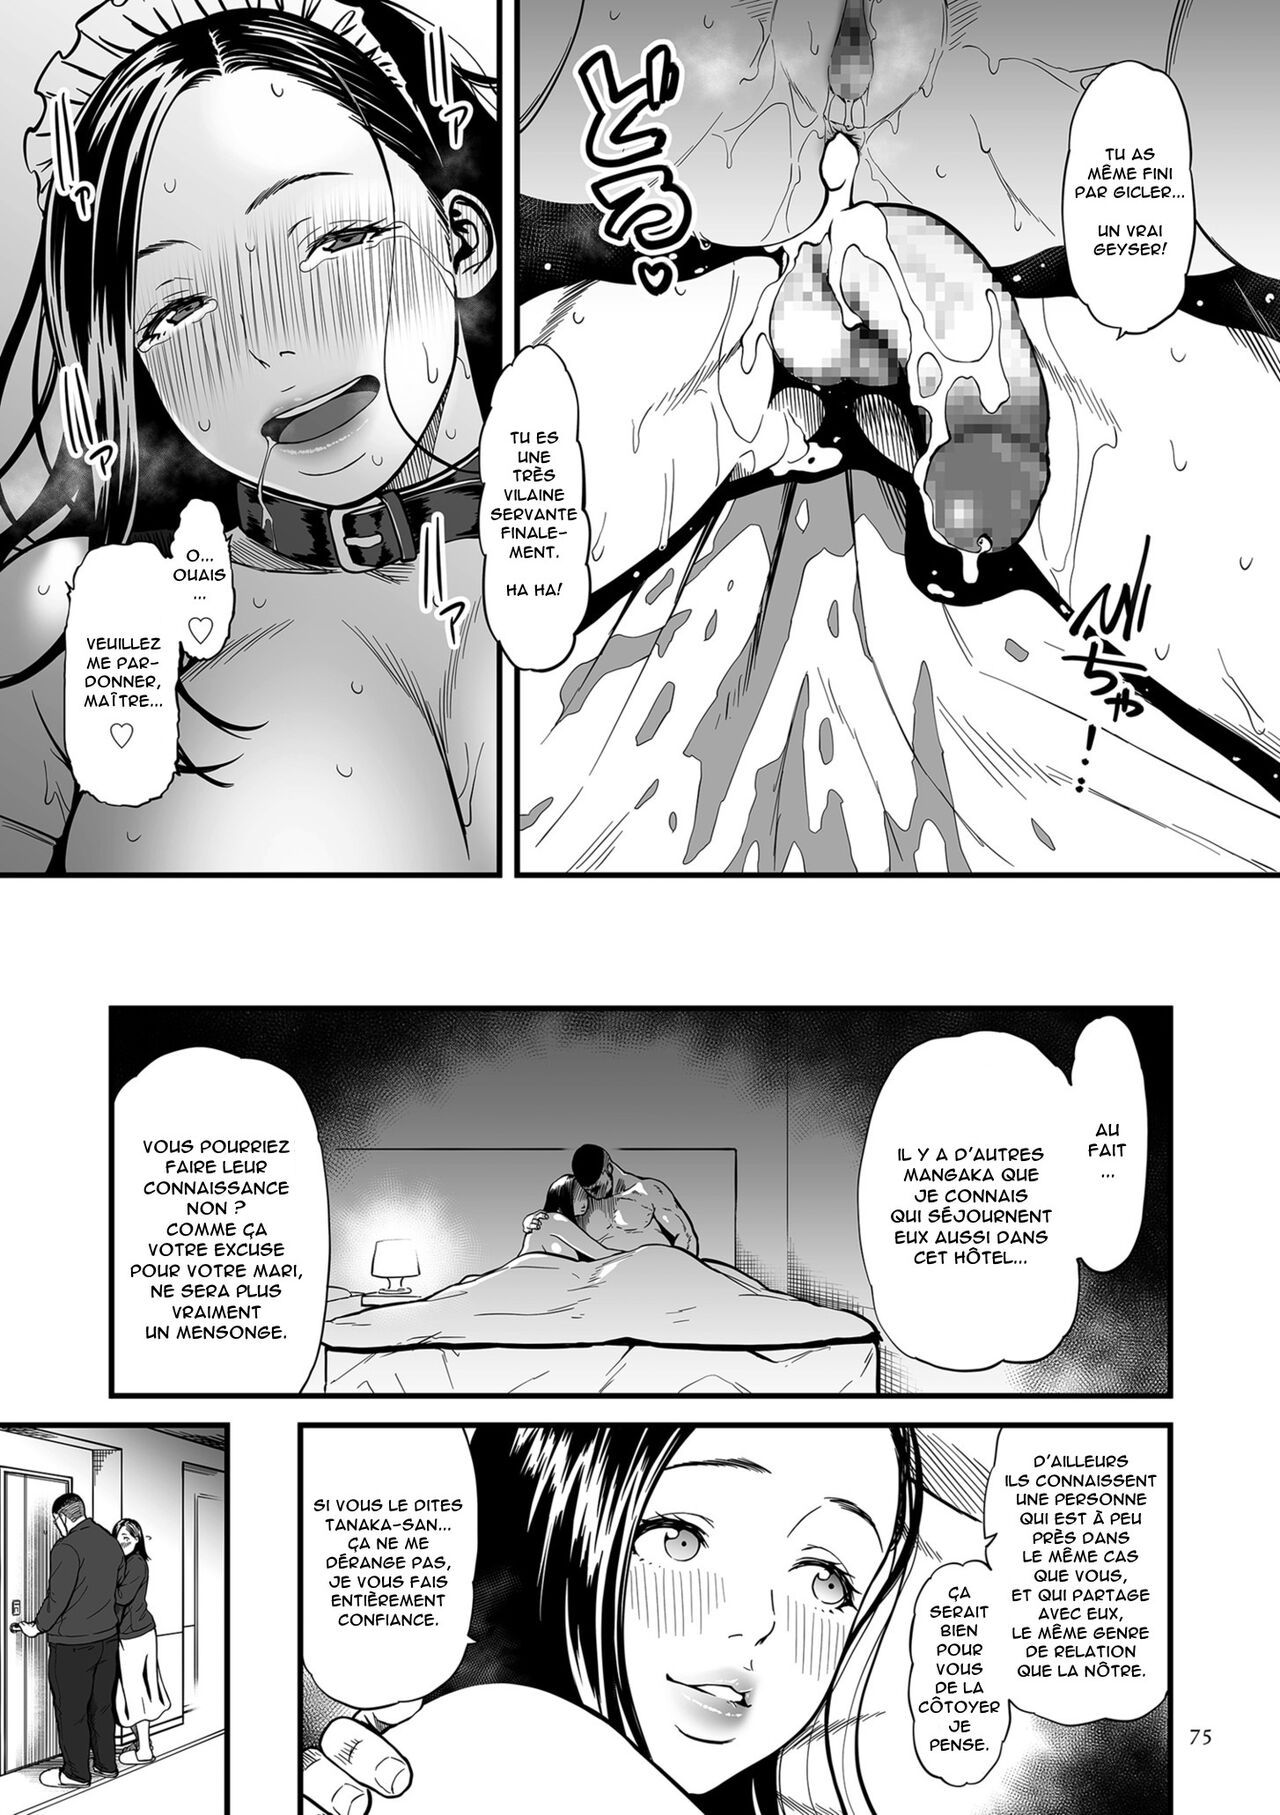 Onna Eromangaka ga Inran da nante Gensou ja nai?  Is It Not a Fantasy That The Female Erotic Mangaka Is a Pervert? numero d'image 75